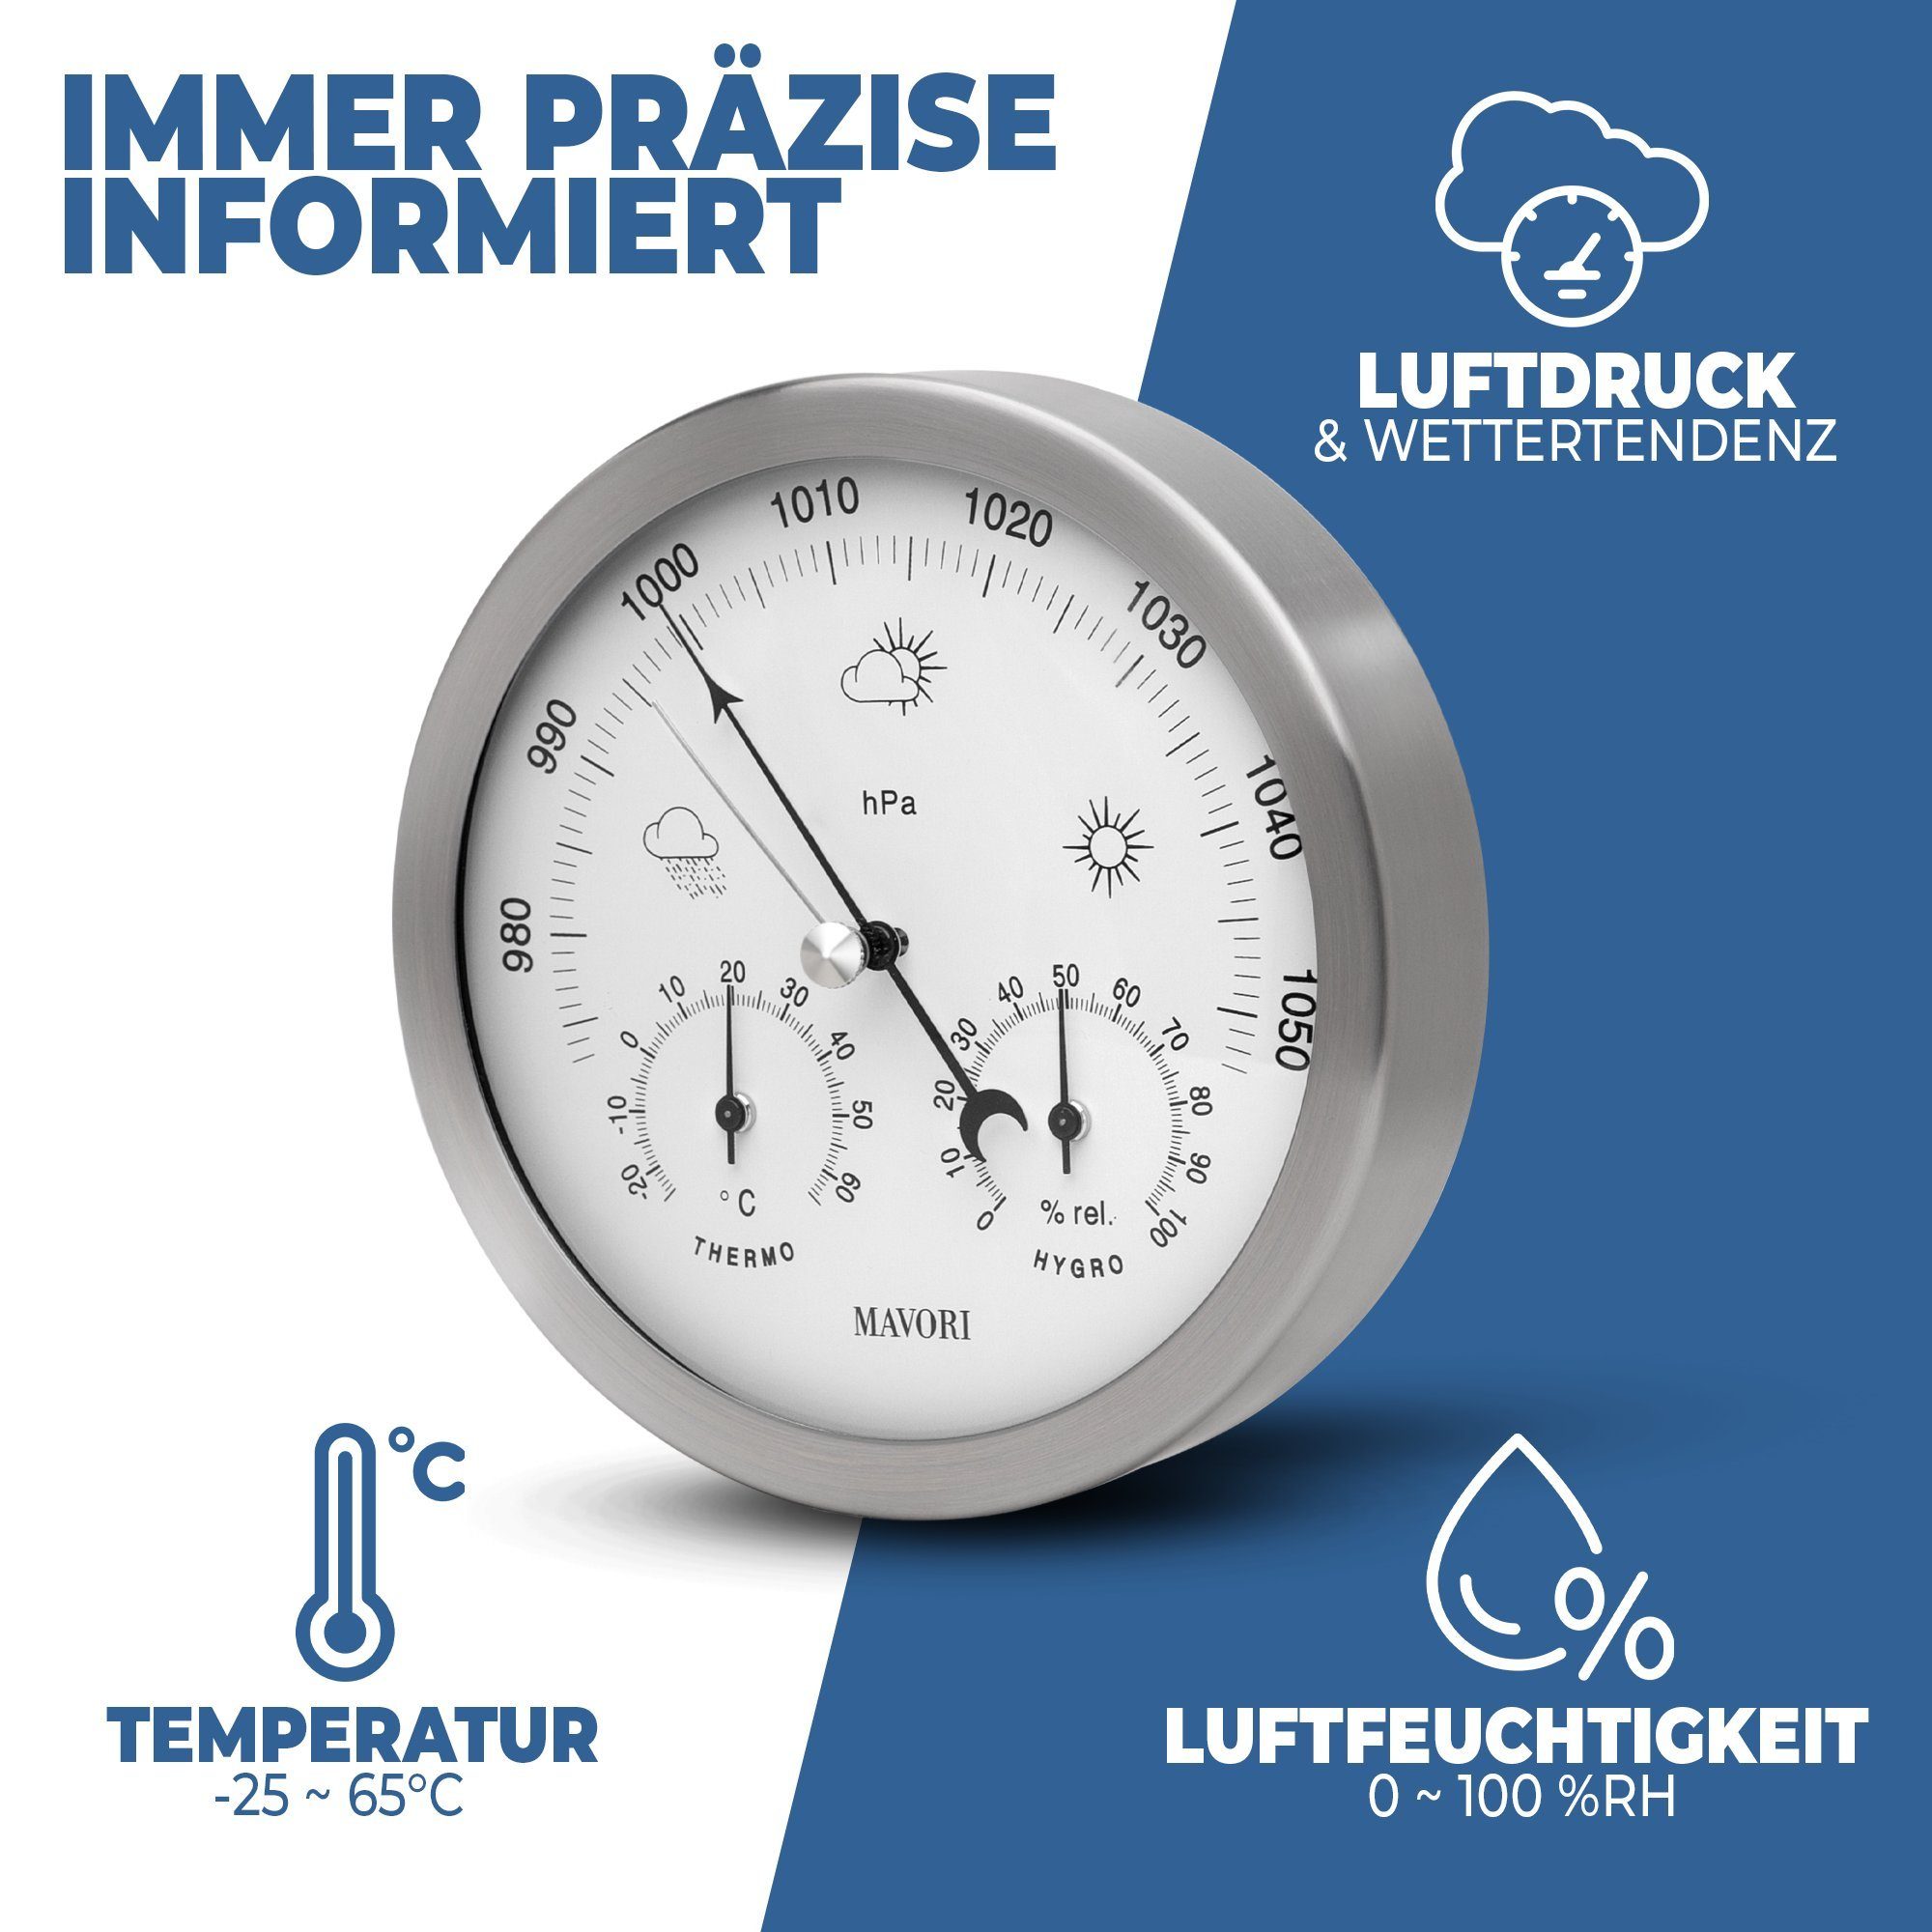 Thermometer - analog Barometer, 3in1 Wetterstation Wetterstation MAVORI Hygrometer &